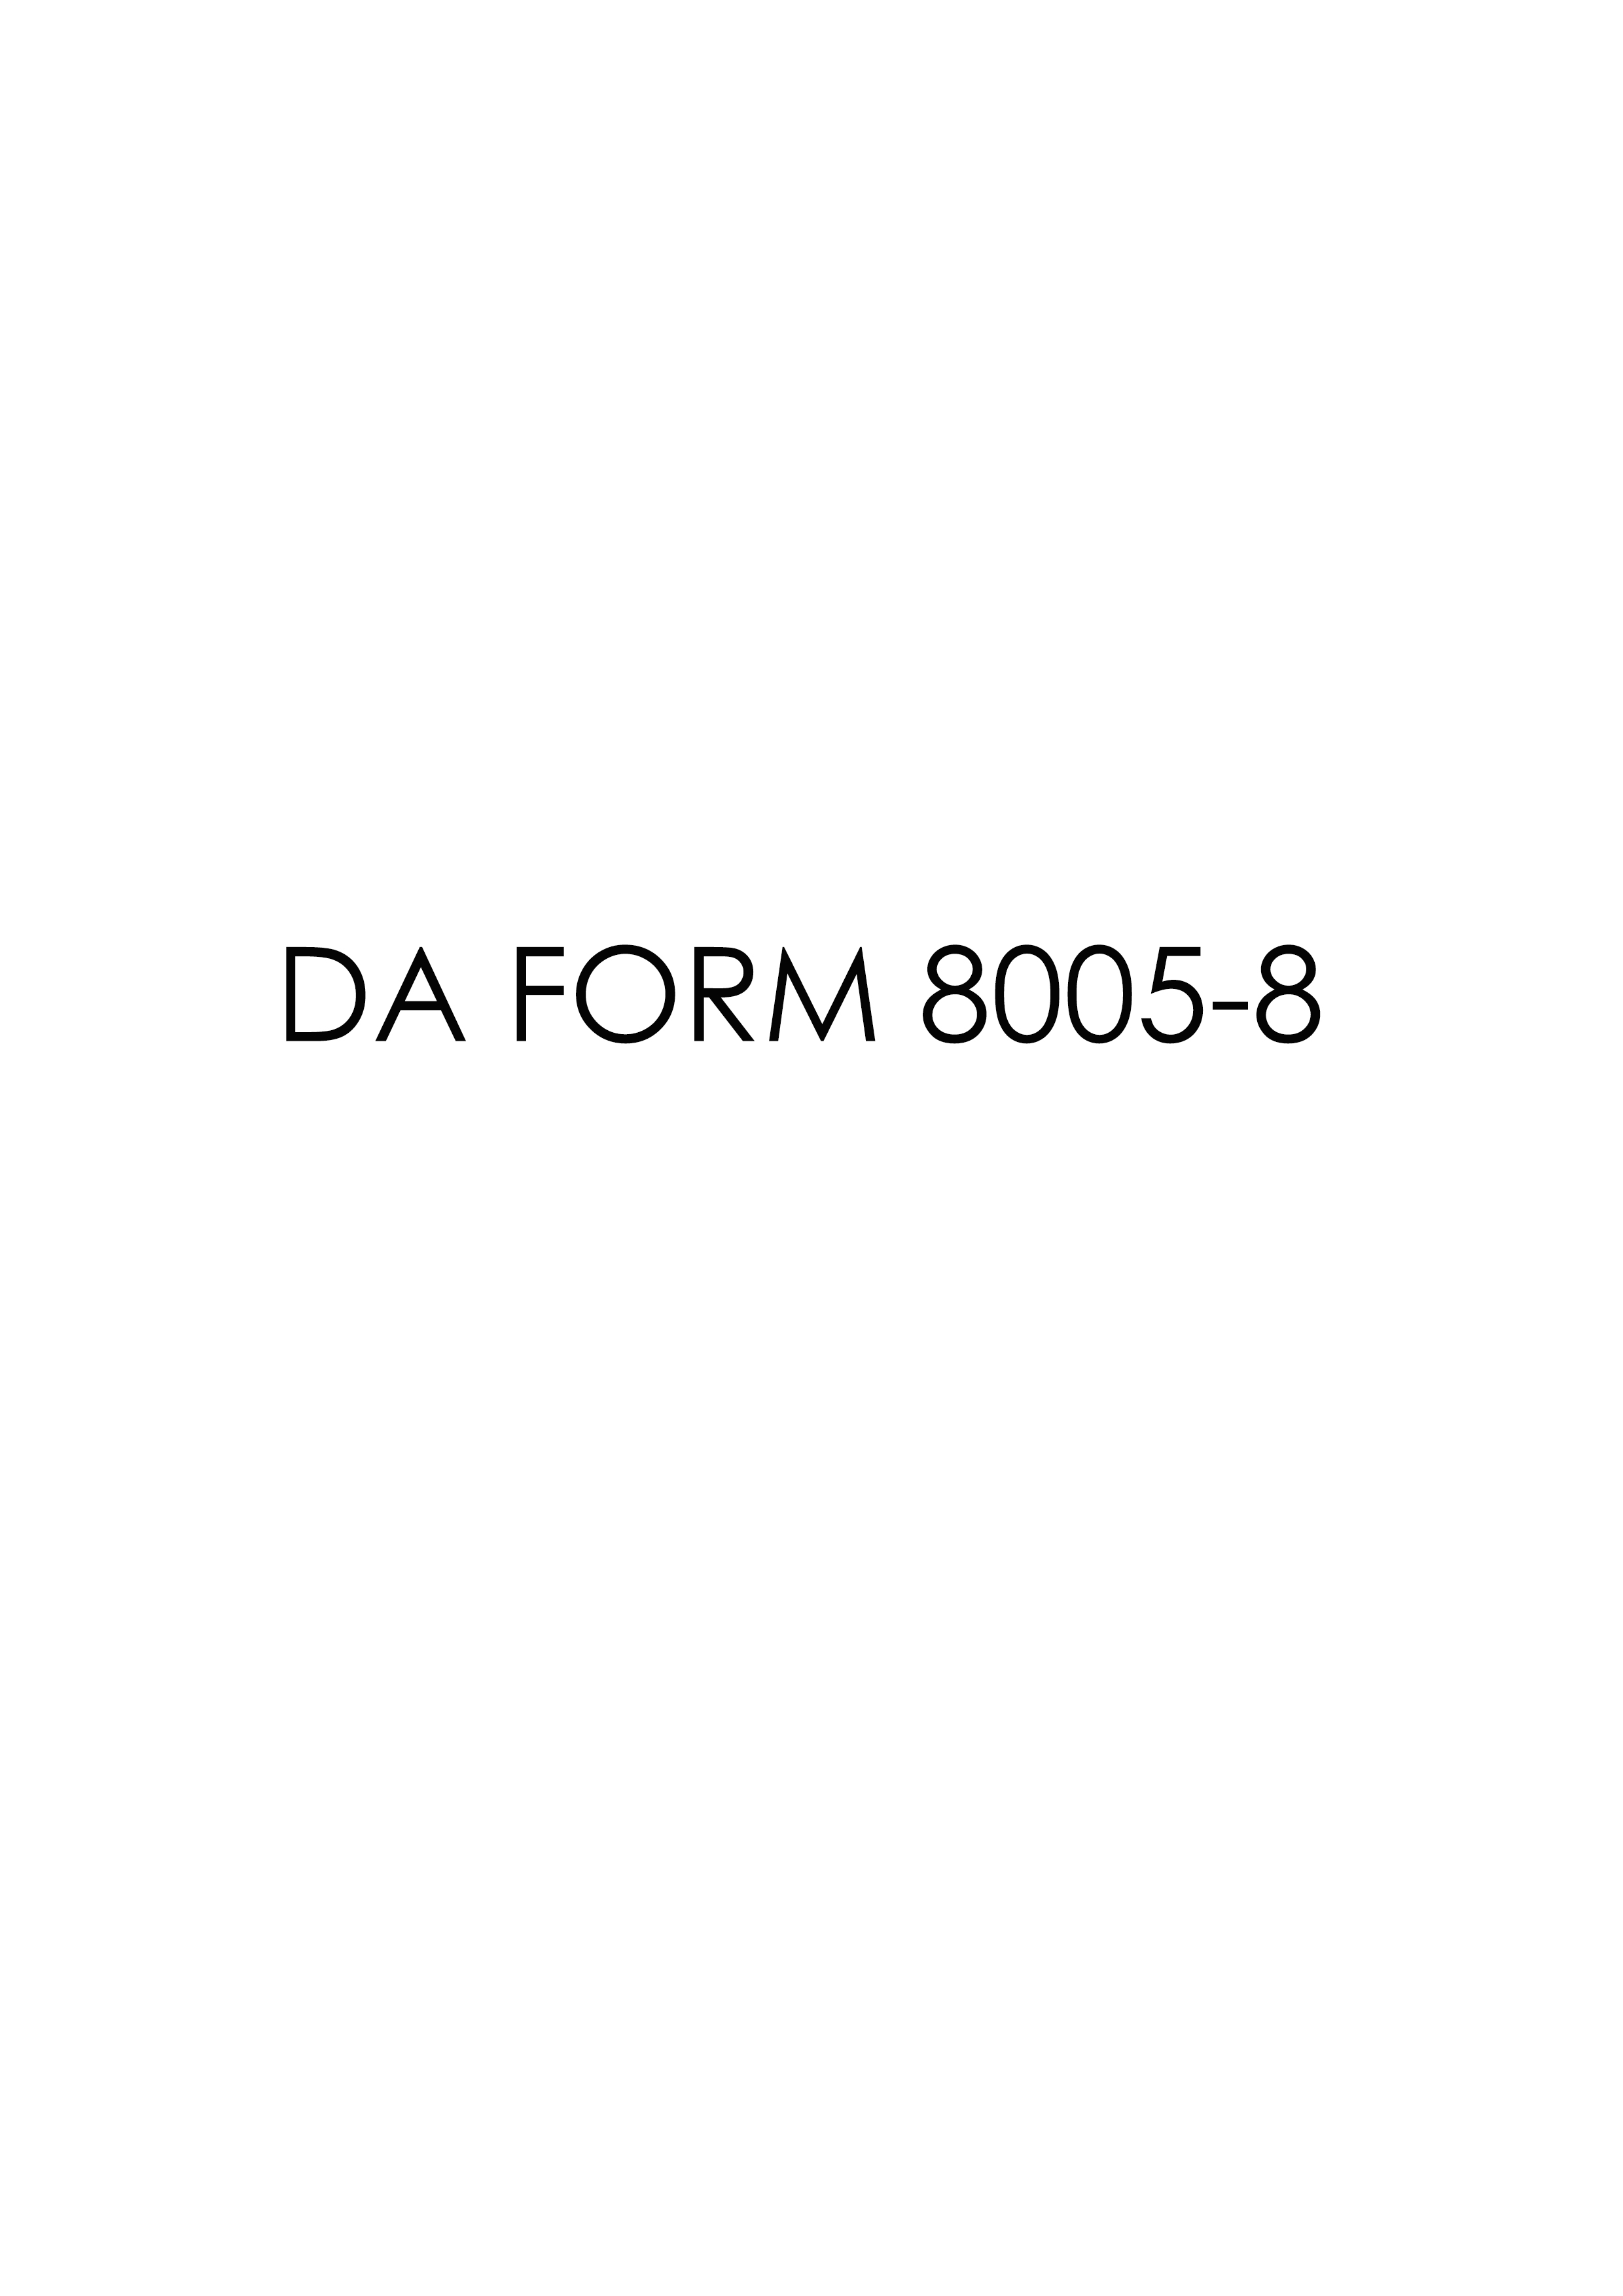 Download da 8005-8 Form